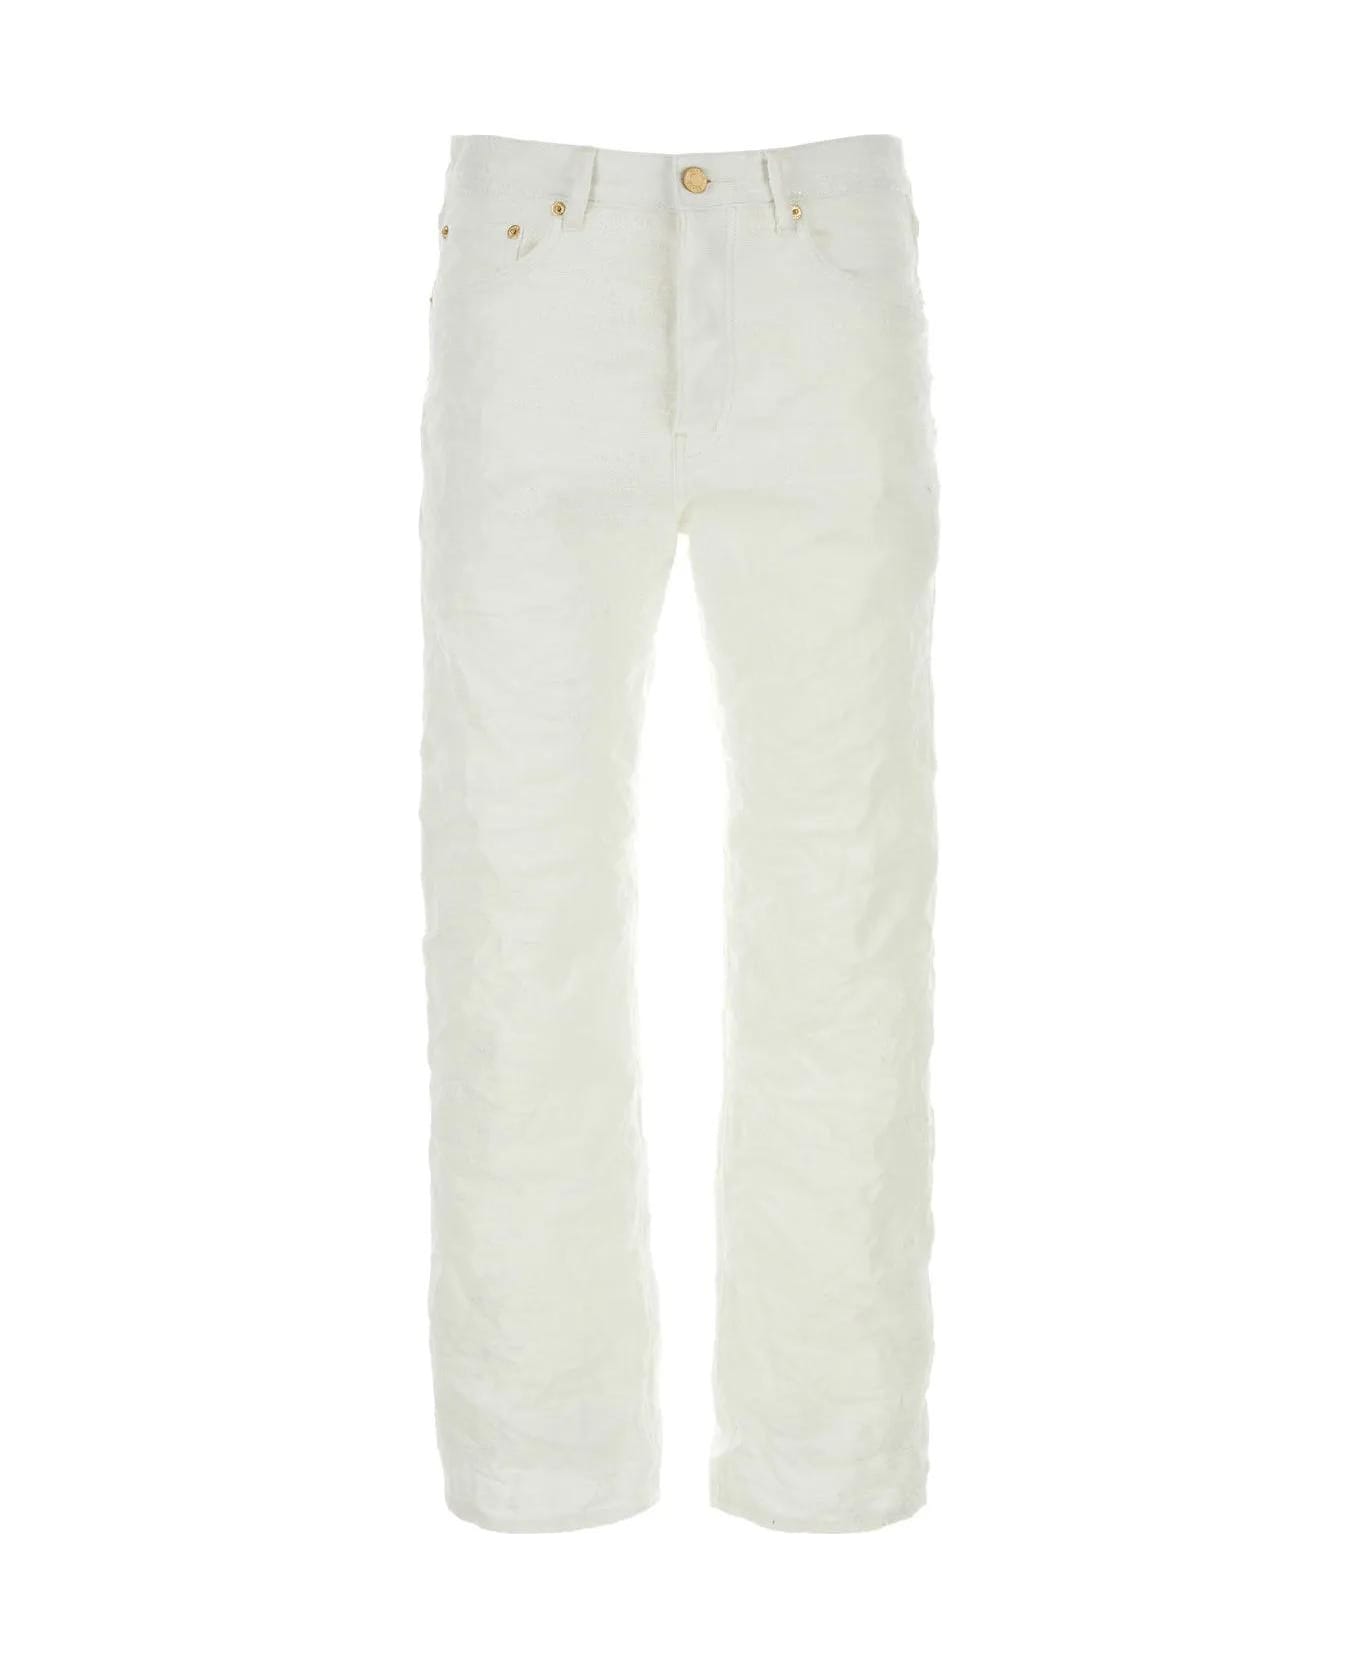 Purple Brand White Denim Jeans - WHITE ボトムス